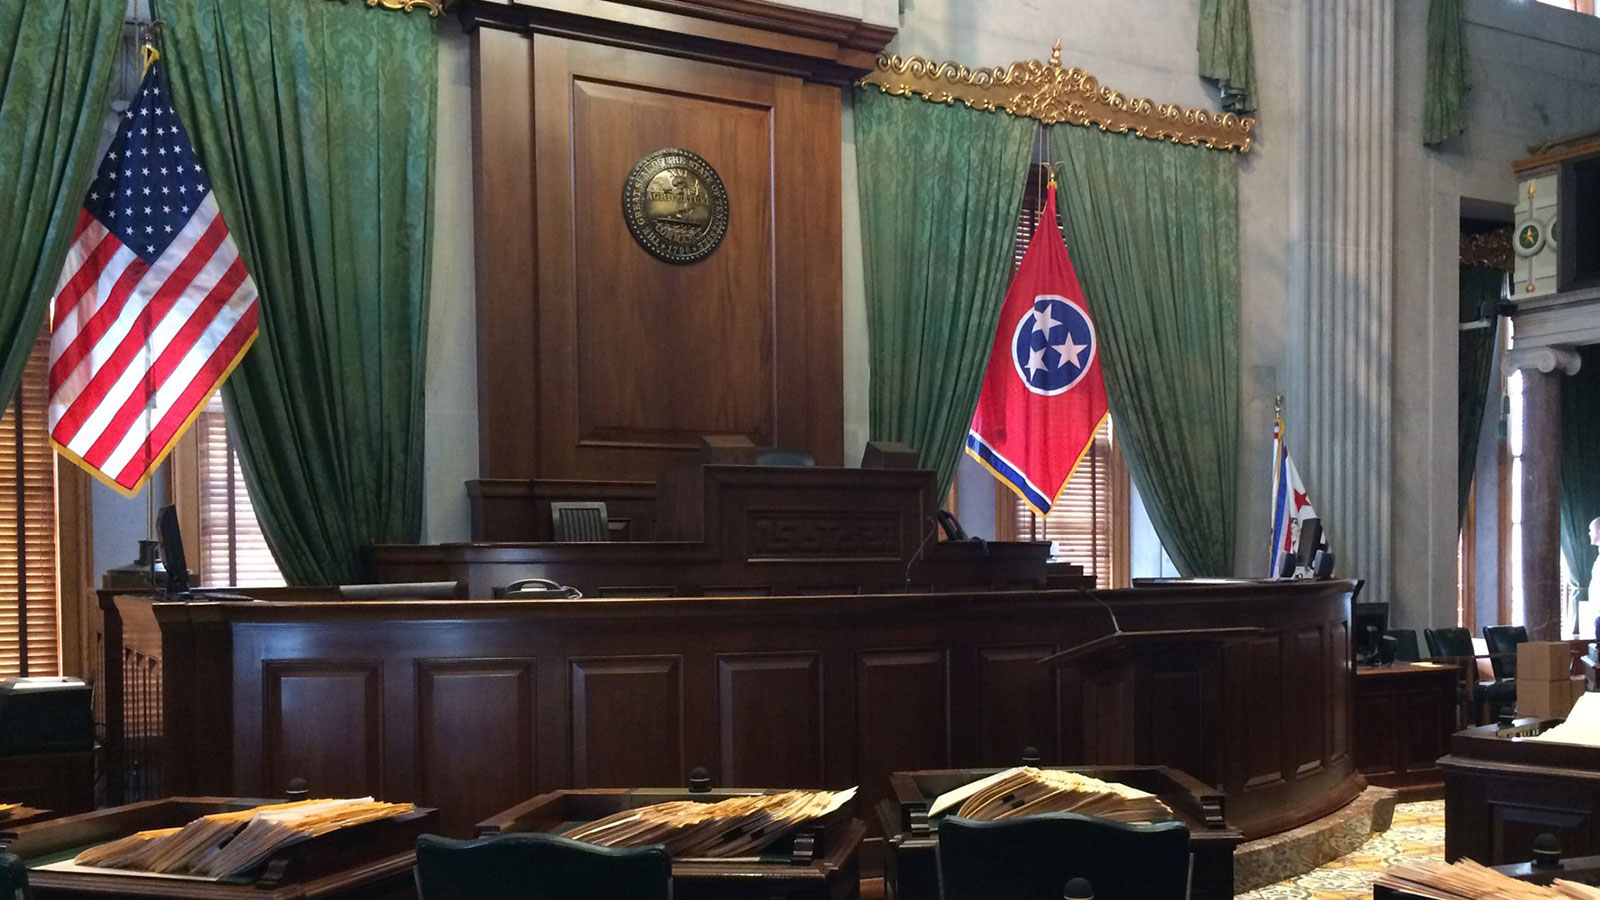 Senate Chamber State Capitol in Nashville